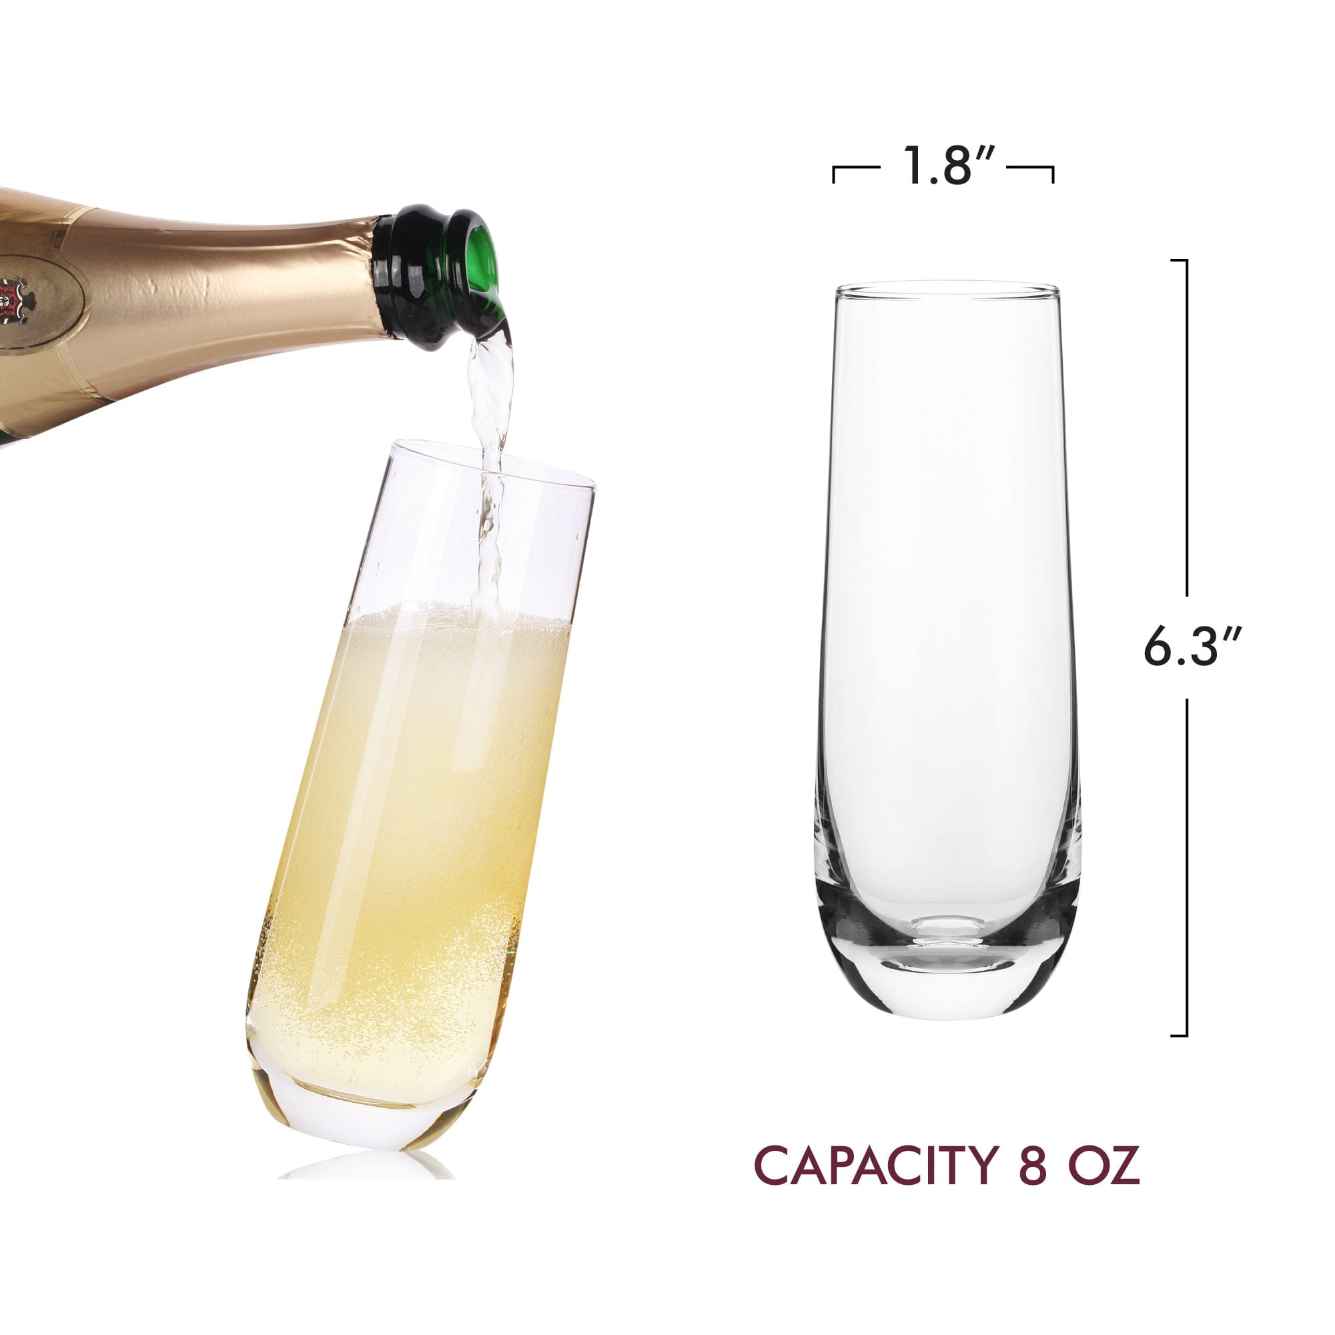 Elixir Glassware Crystal Wine Glasses - Set of 4 - 14 oz Stemware - Re –  Advanced Mixology